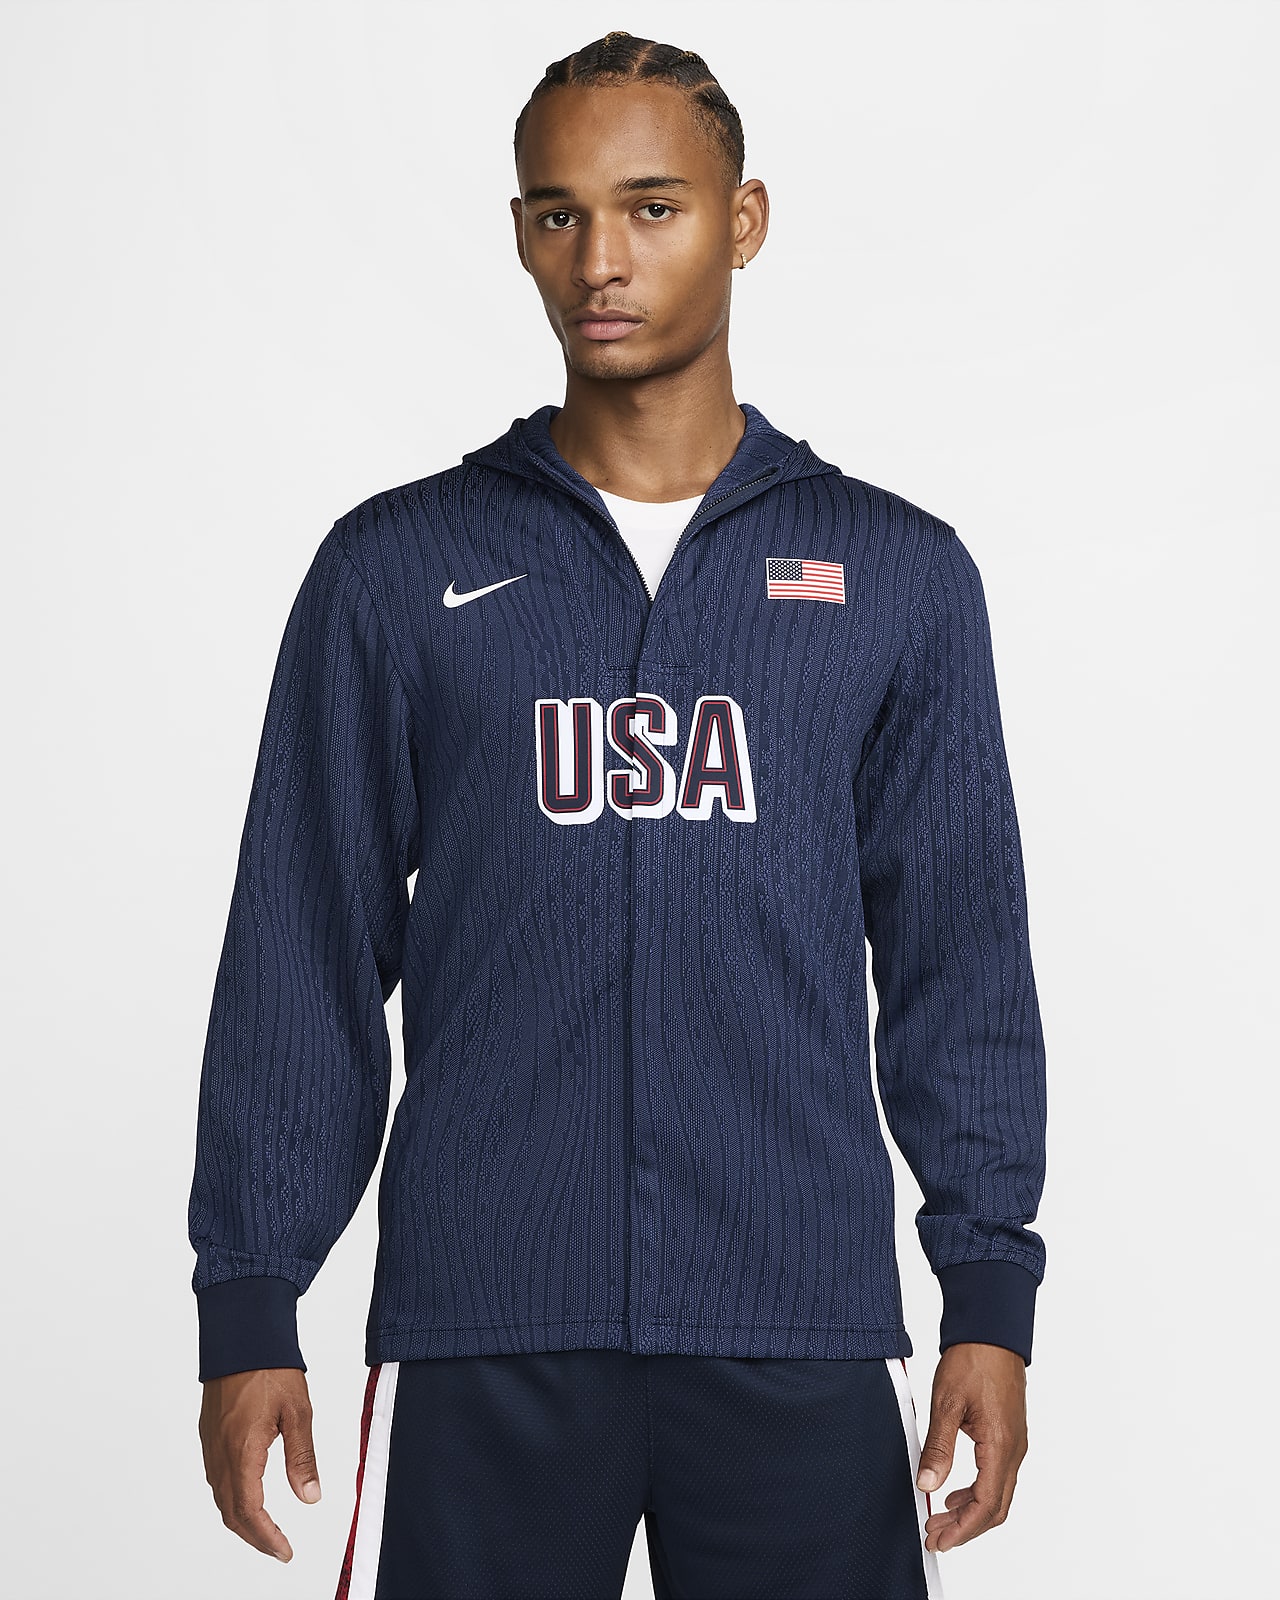 USA Men's Nike Dri-FIT ADV Basketball Game Jacket